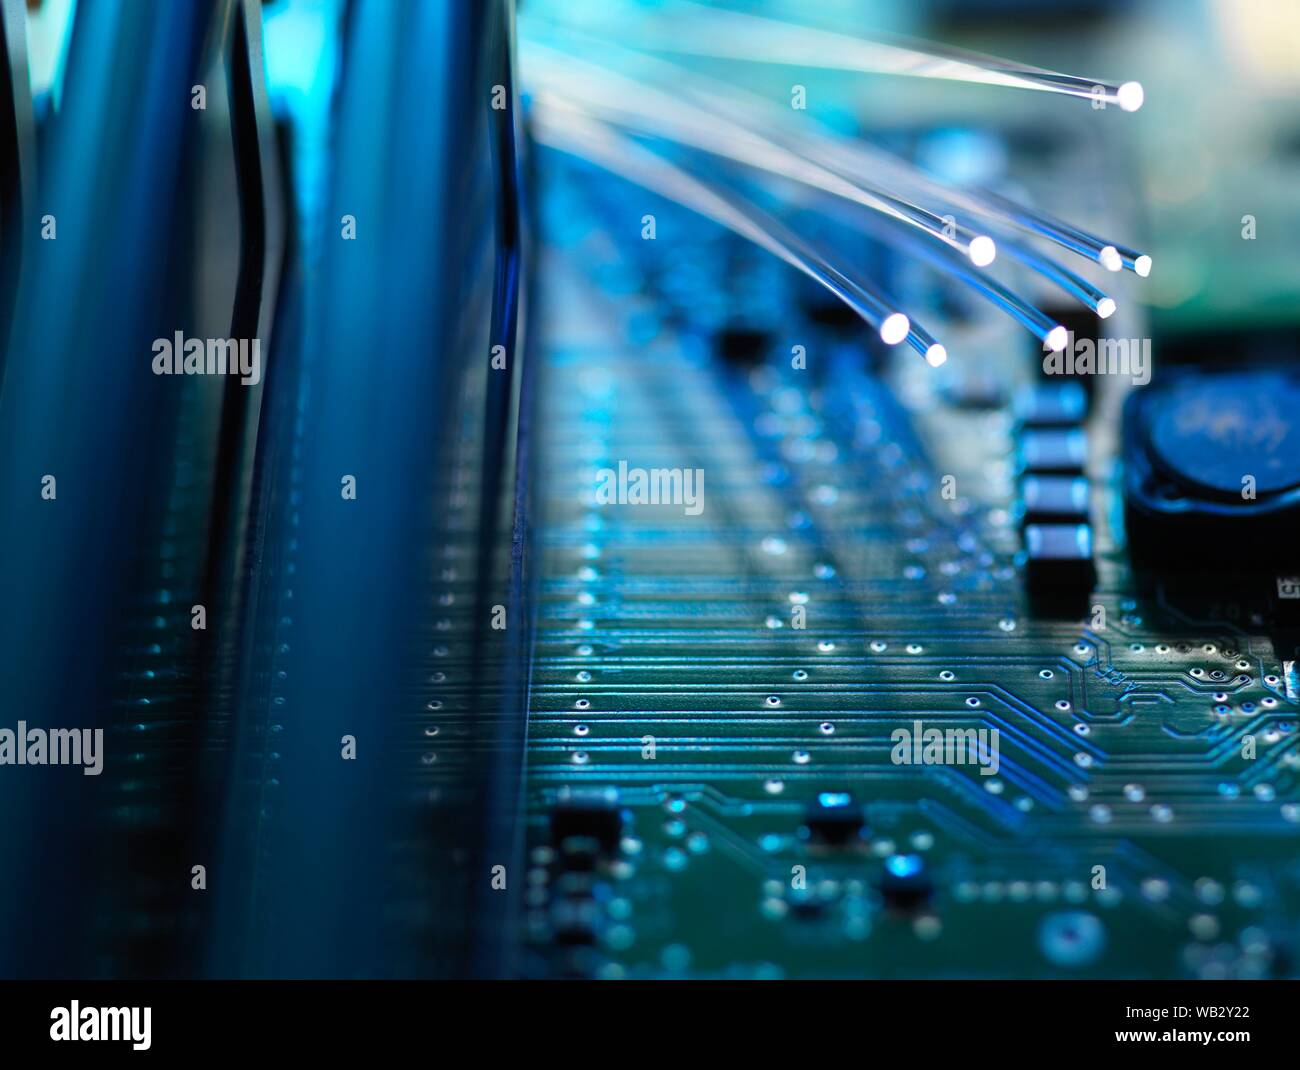 Digital communication, conceptual image. Fibre optics carrying data passing across a computer's motherboard. Stock Photo